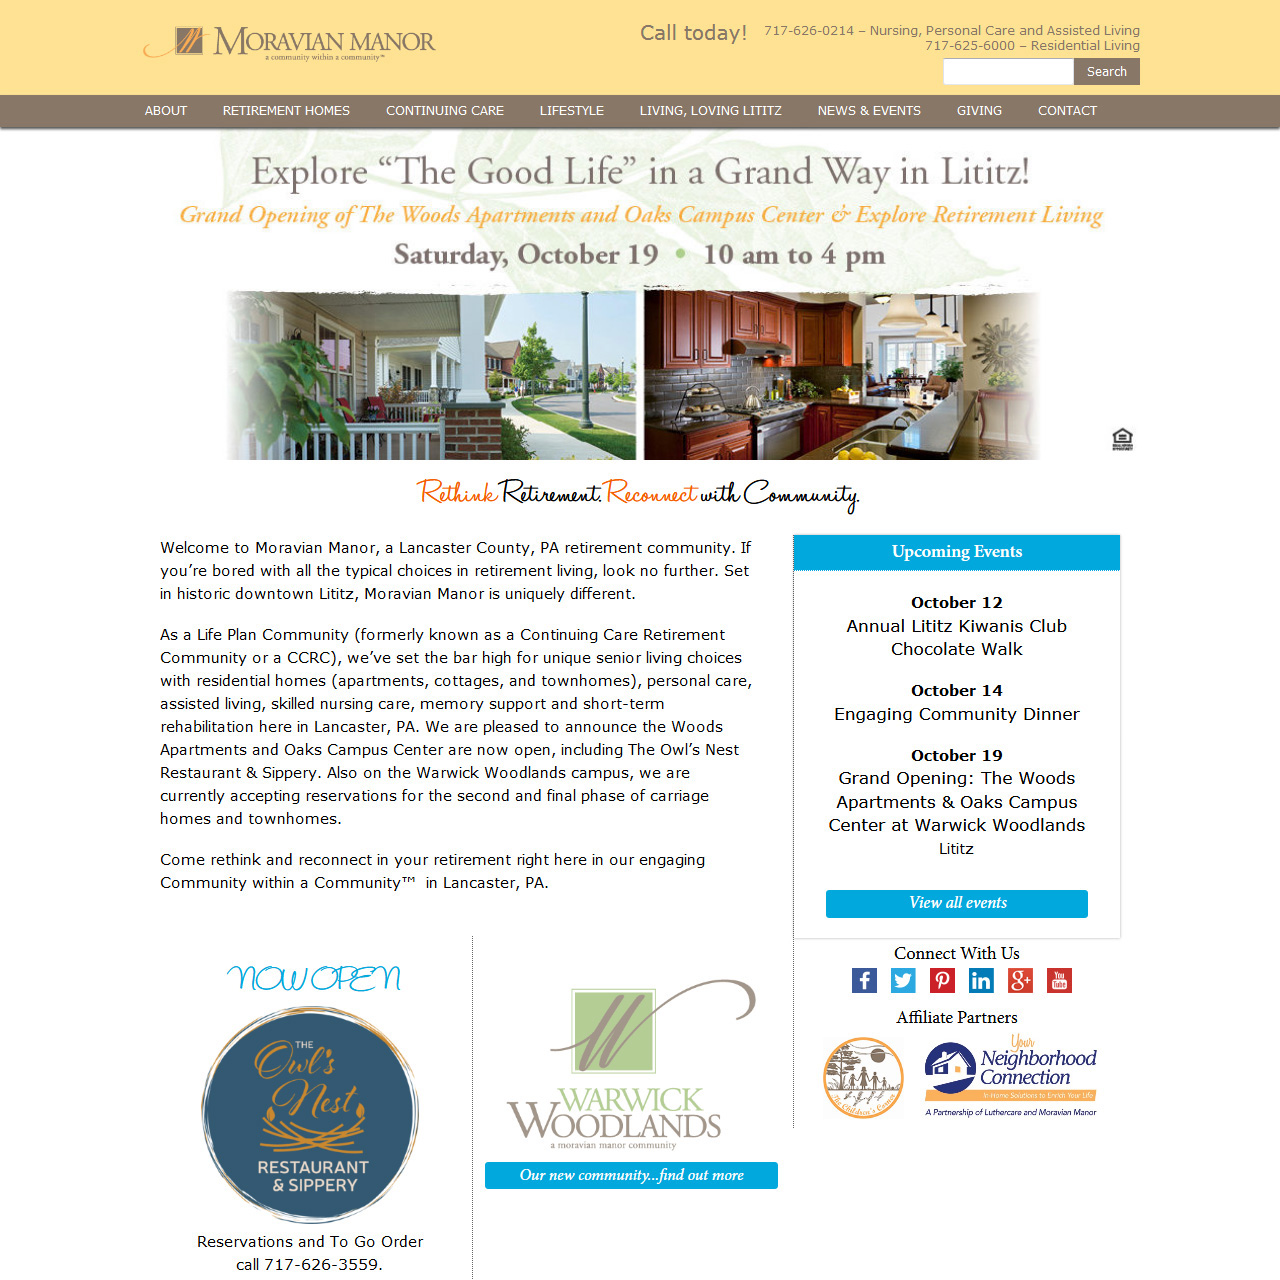 Moravian Manor Nursing Home website design